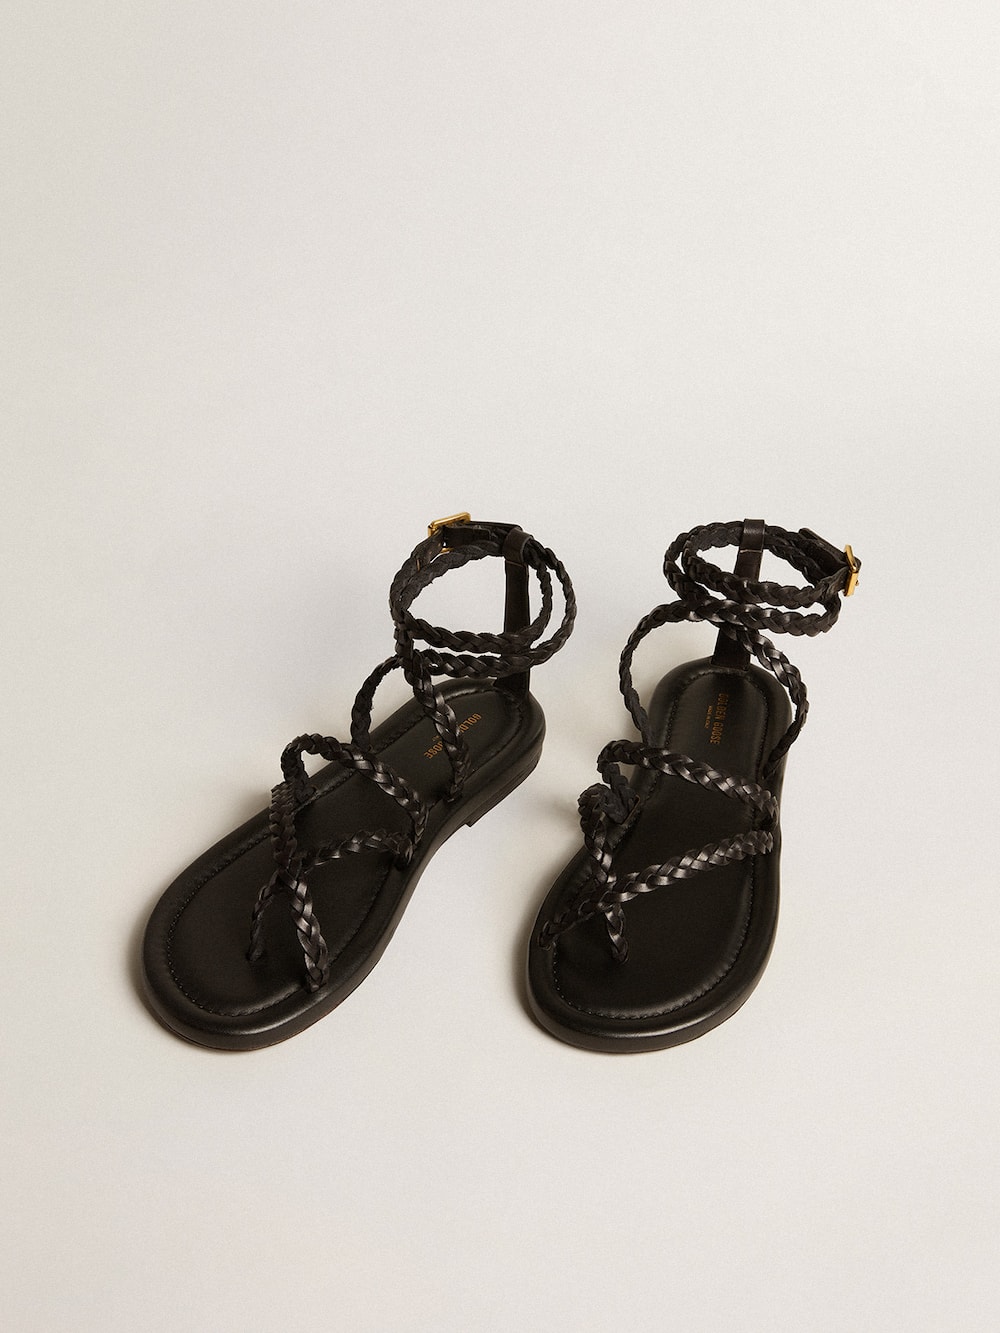 Golden Goose - Penelope flat sandals in black leather in 